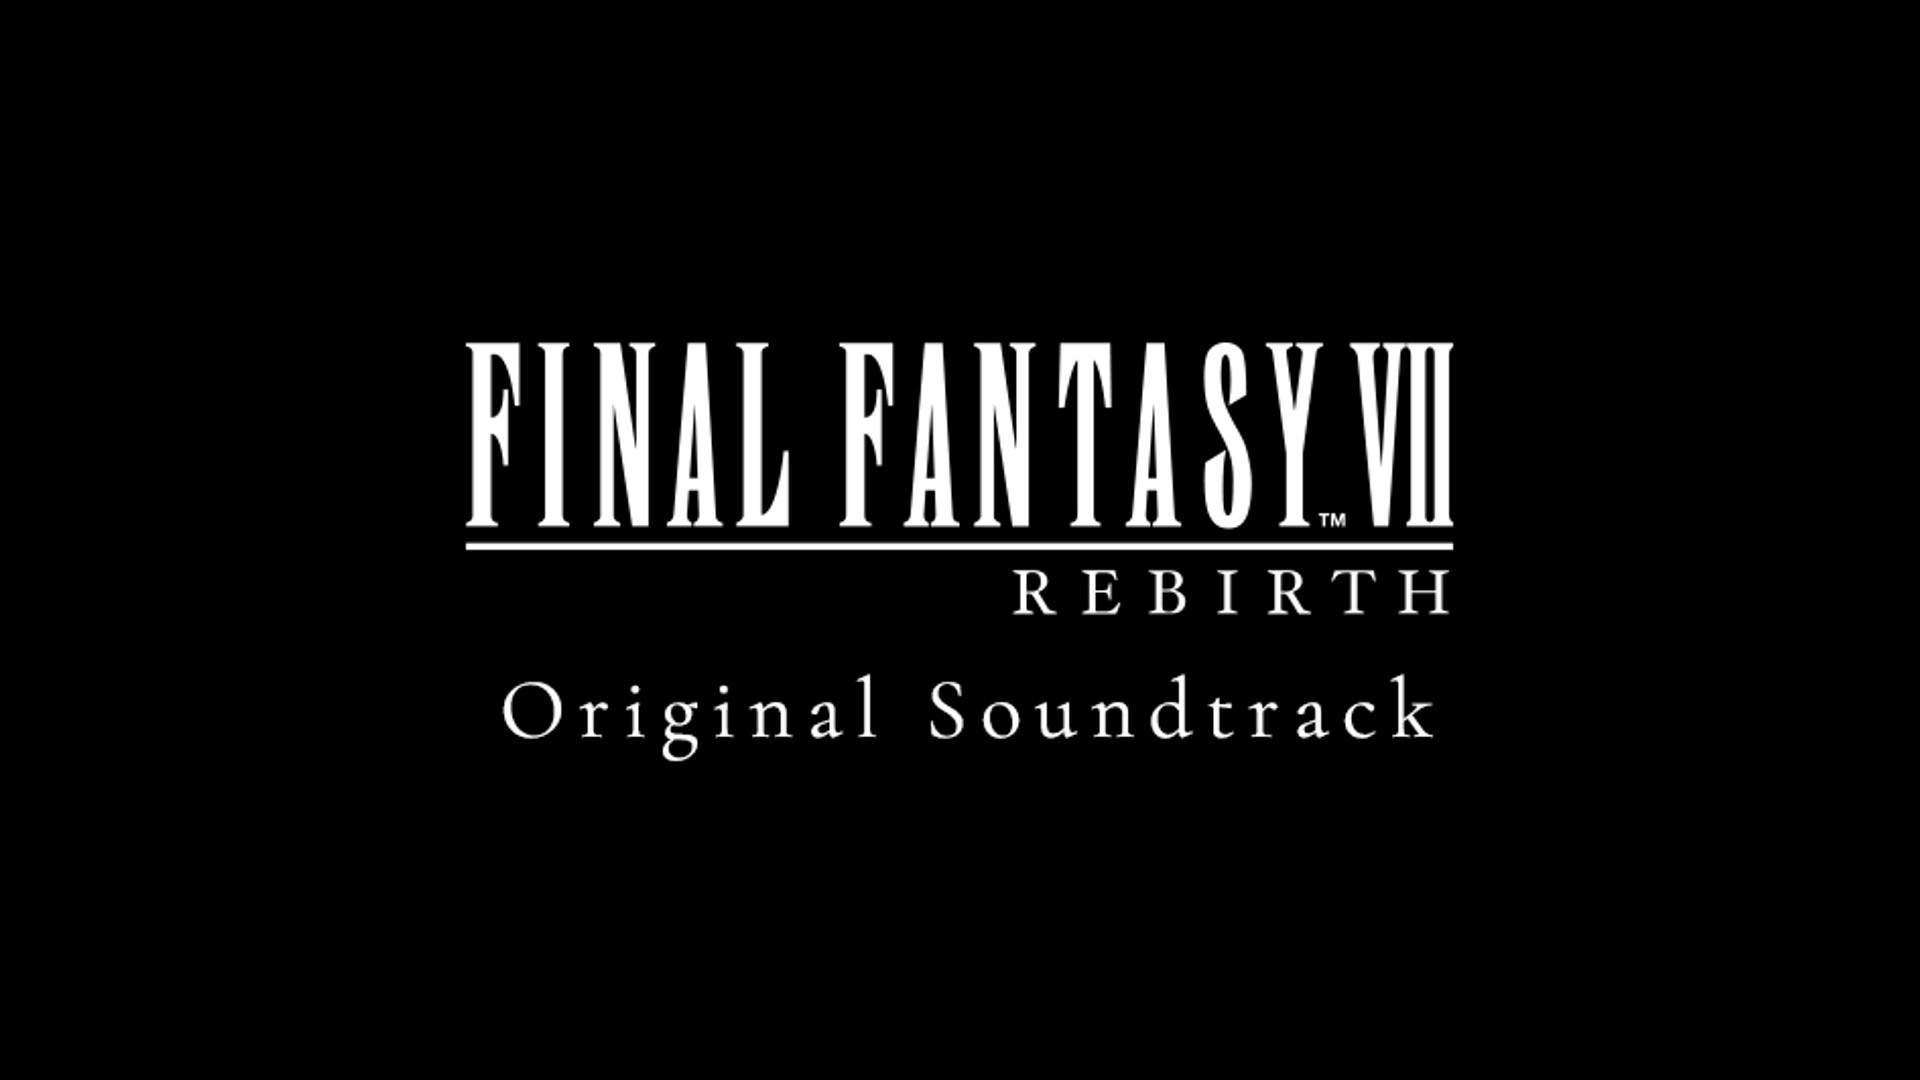 A black background with the FINAL FANTASY VII REBIRTH Original Soundtrack text logo.